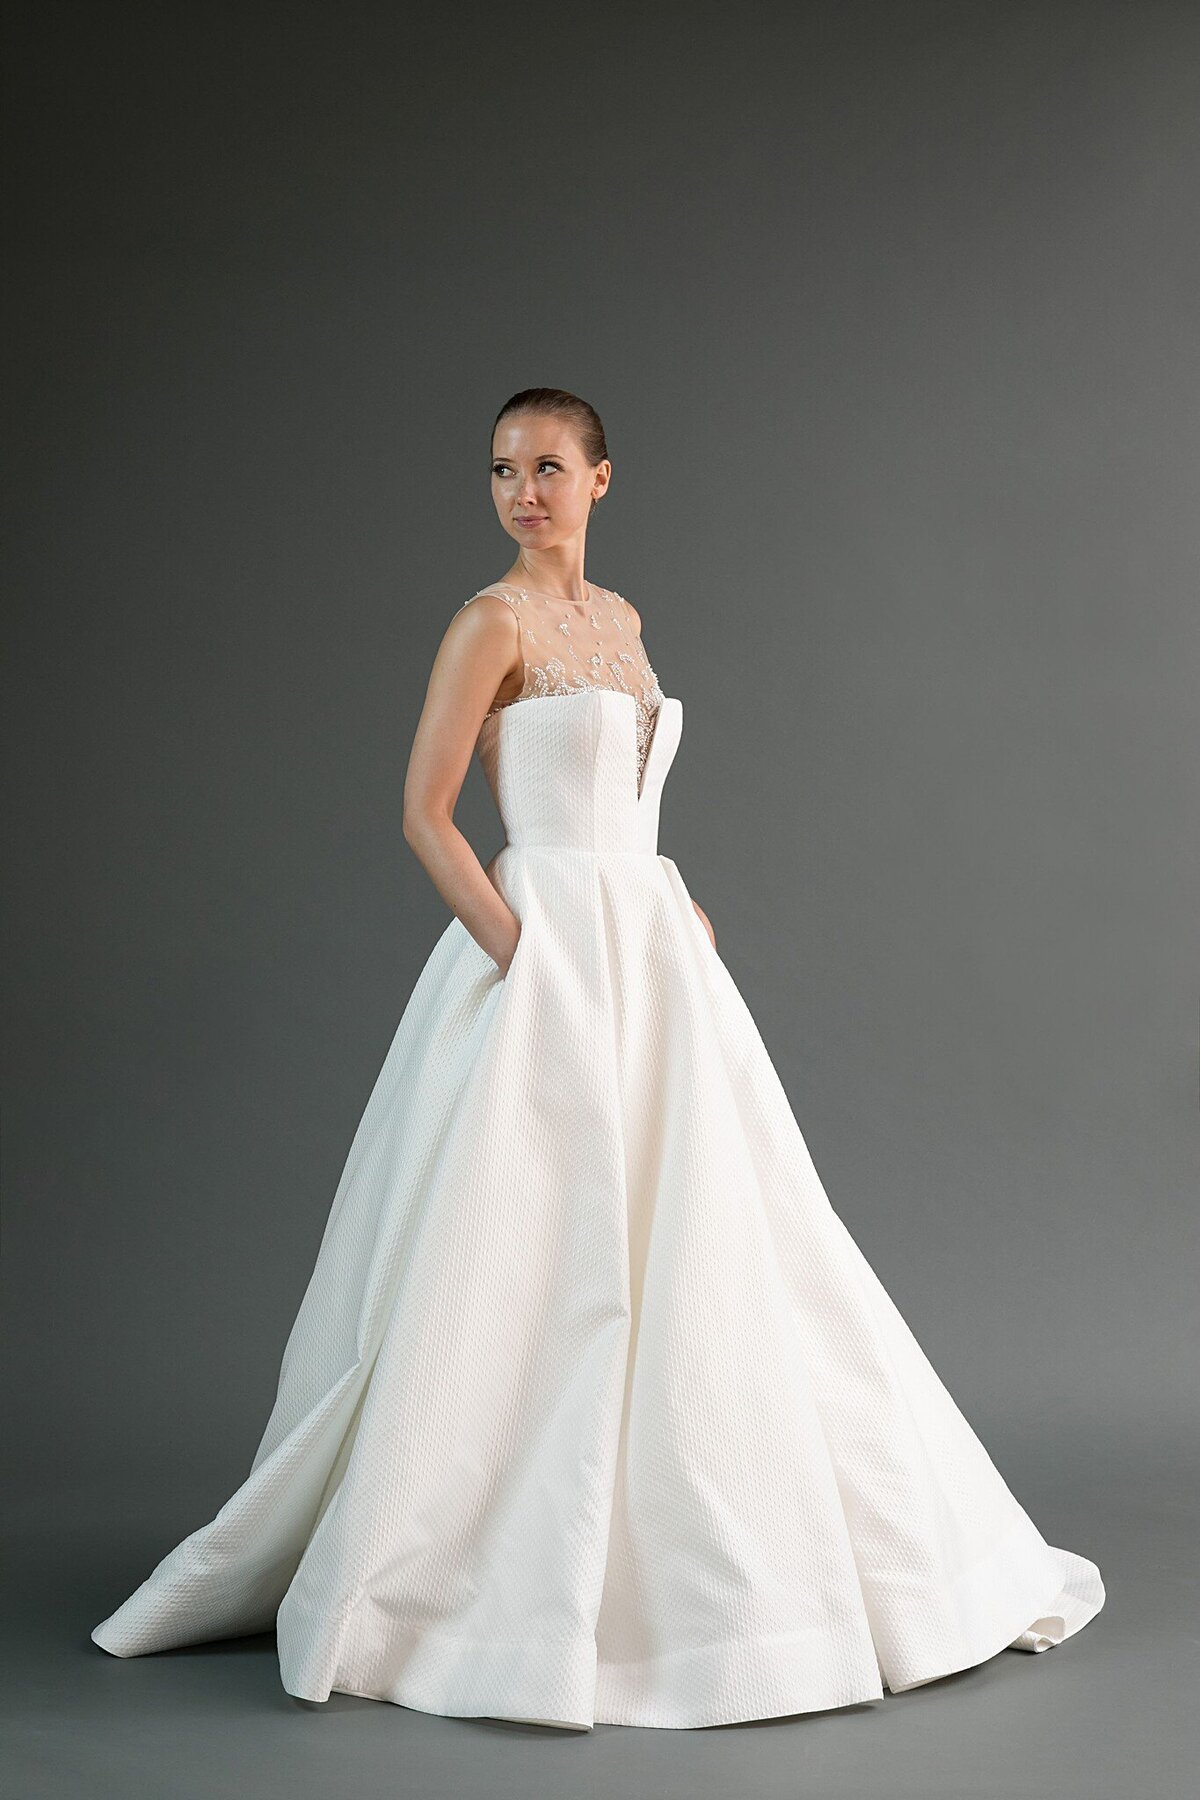 Kei is a modern ballgown wedding dress with pockets and an illusion neckline by indie bridal designer Edith Elan.